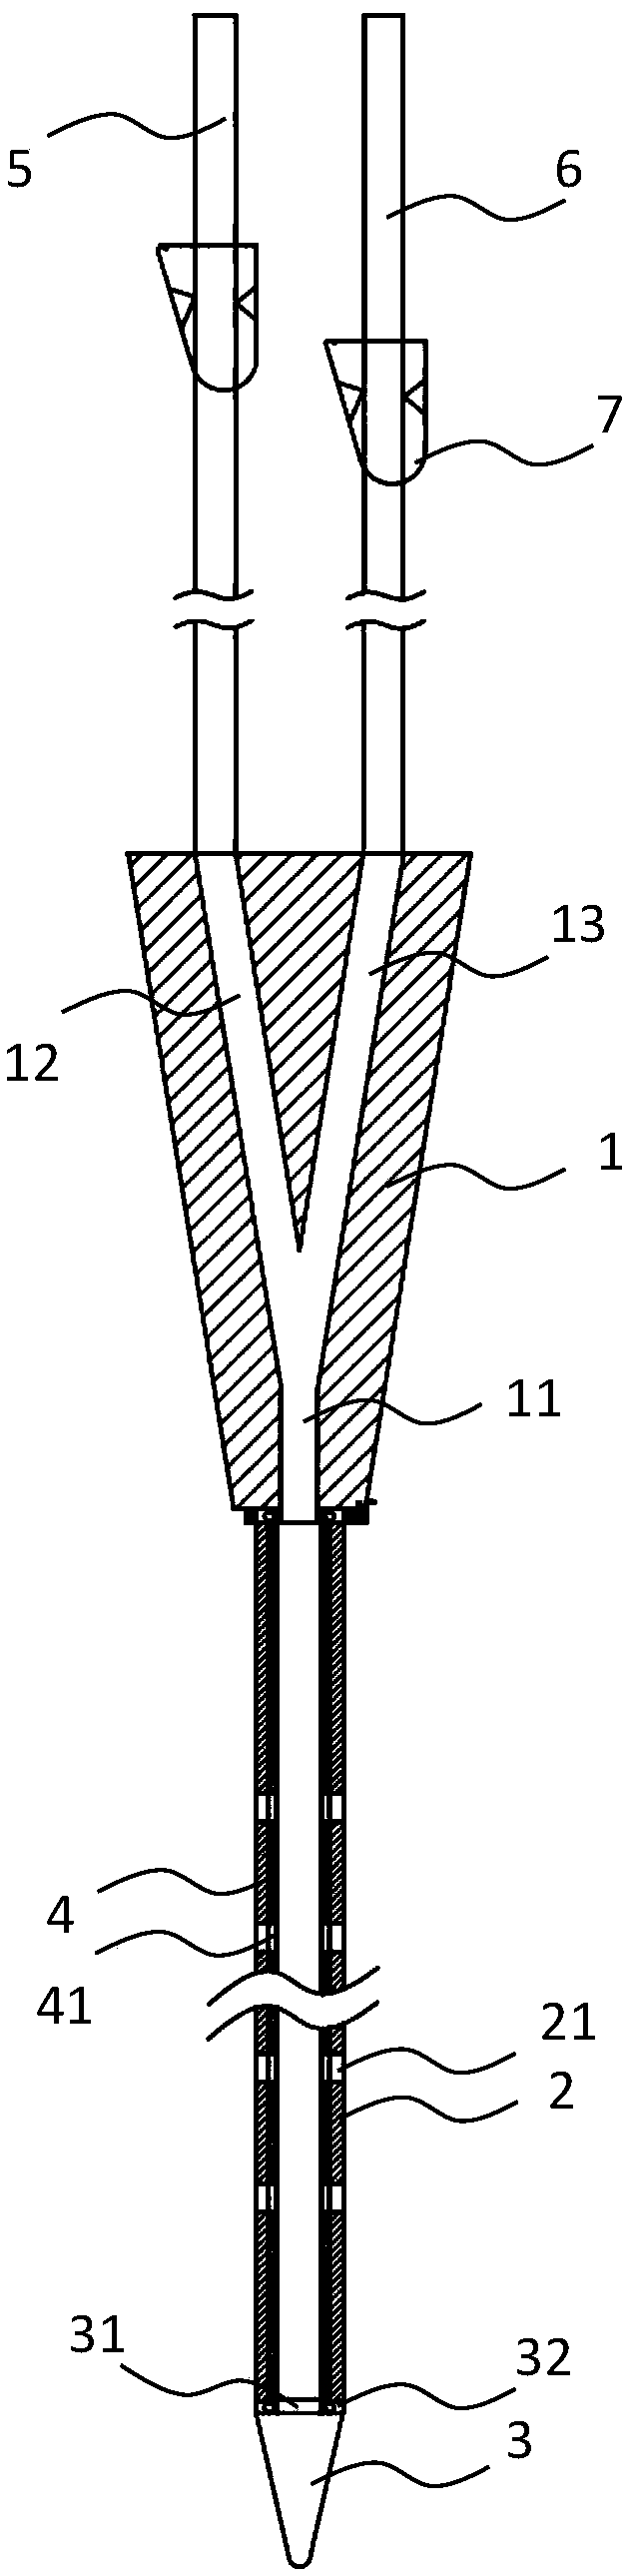 A dual-lumen deep vein blood filter tube device